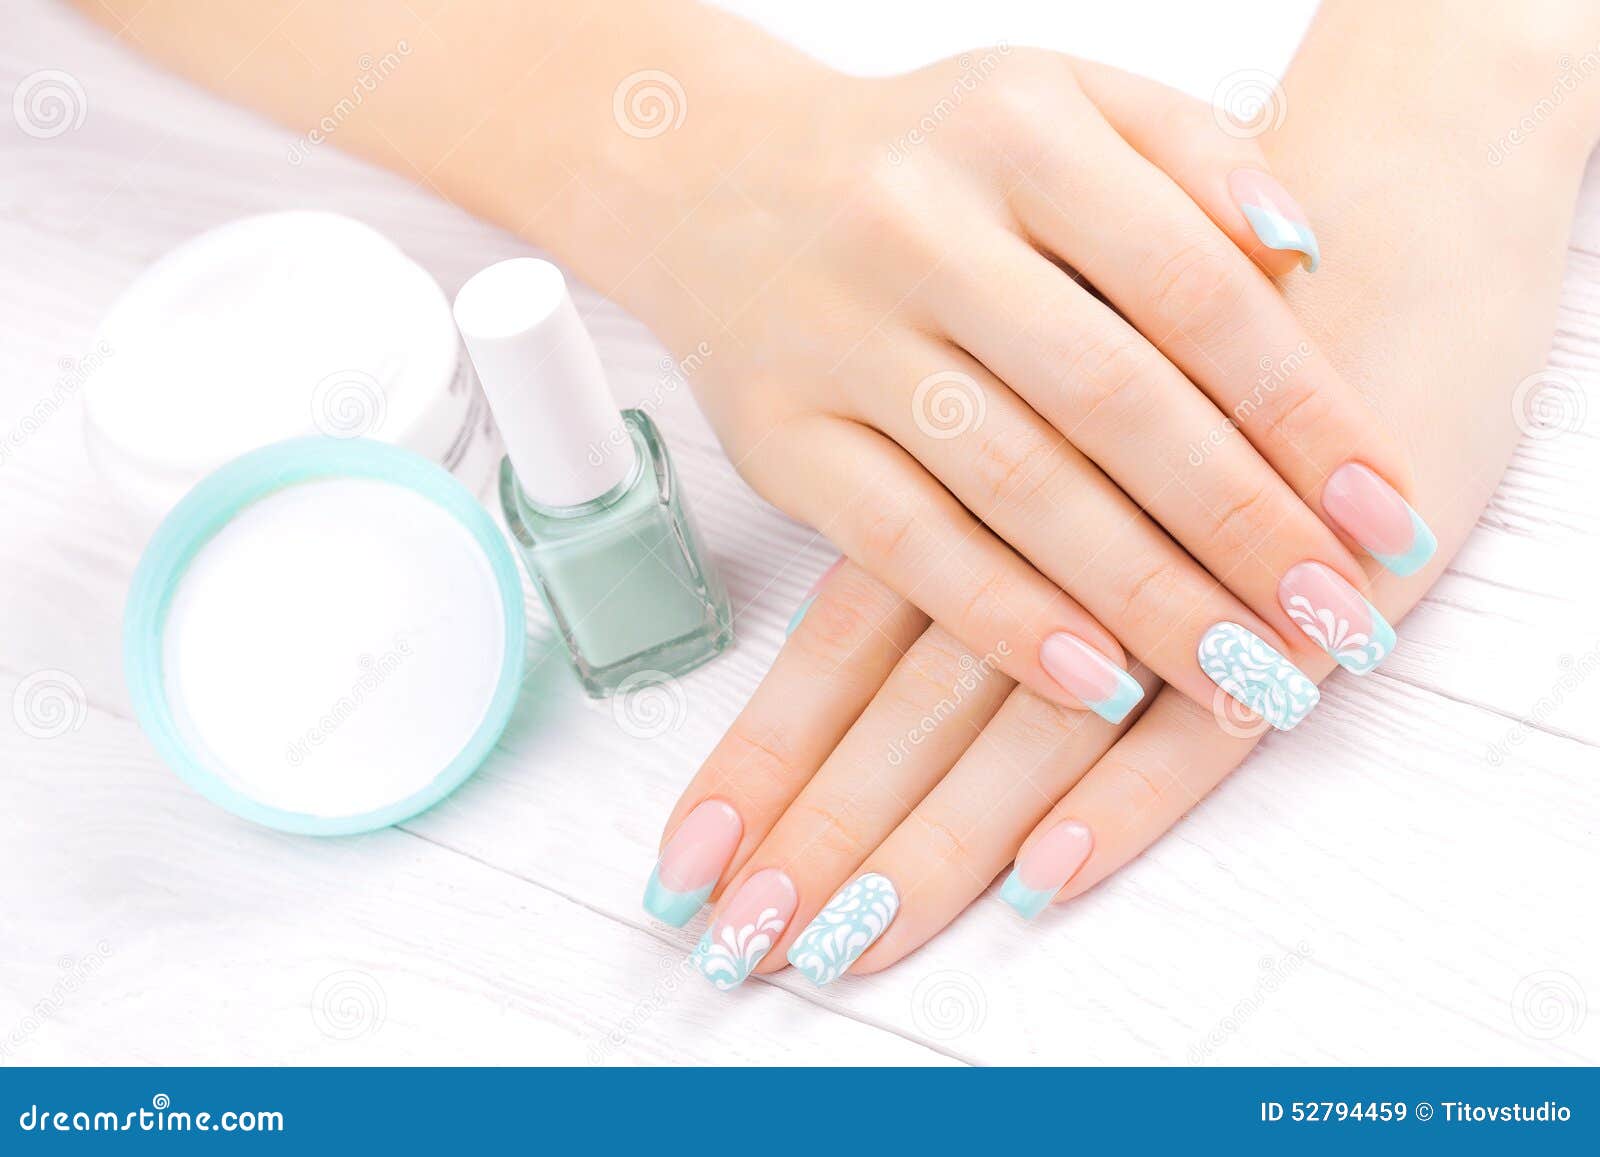 diseño de uñas en turquesa  Nails Beauty